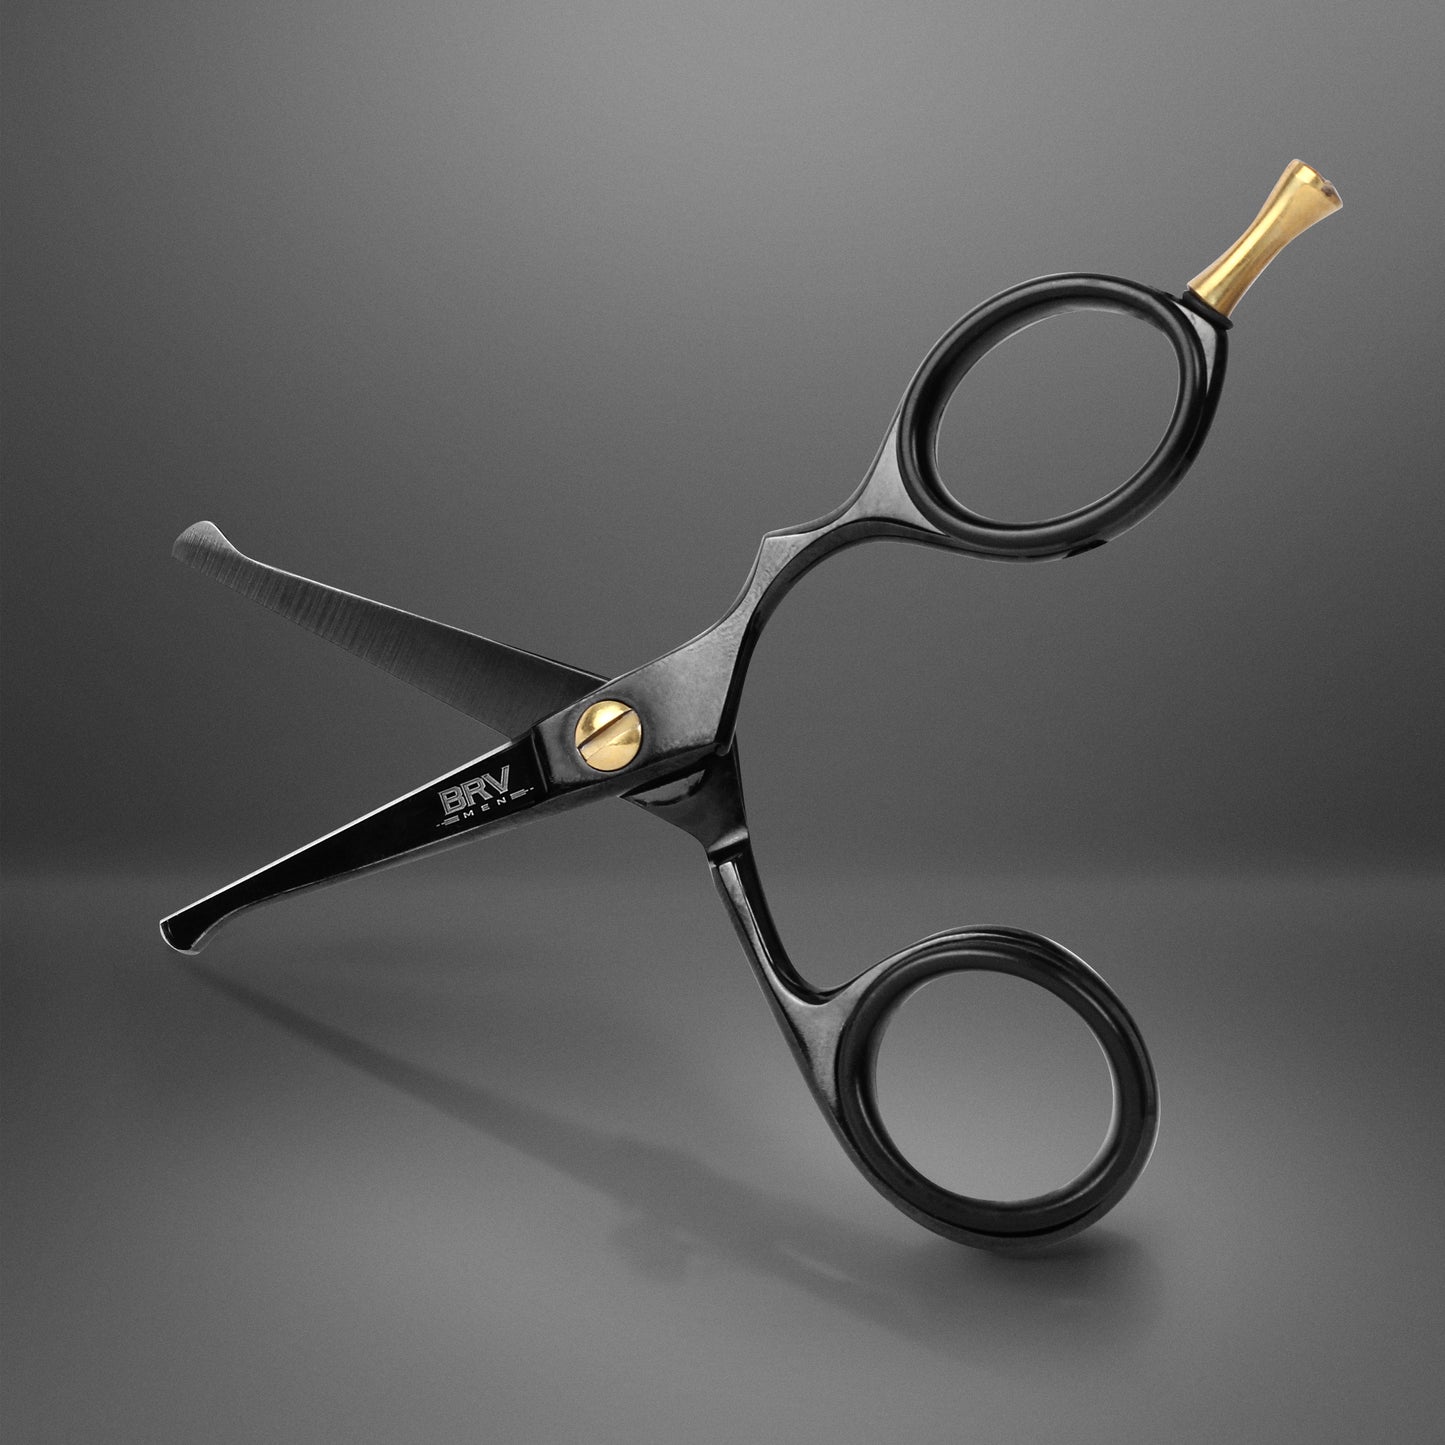 
                  
                    BRV MEN Rounded-Tip Scissors, 4.2" - Titanium Plated, Hammer Forged 100% Stainless Steel - Beard, Mustache, Nose Hair, Ear Hair Trimming - Professional Grooming Scissors - (Black)
                  
                